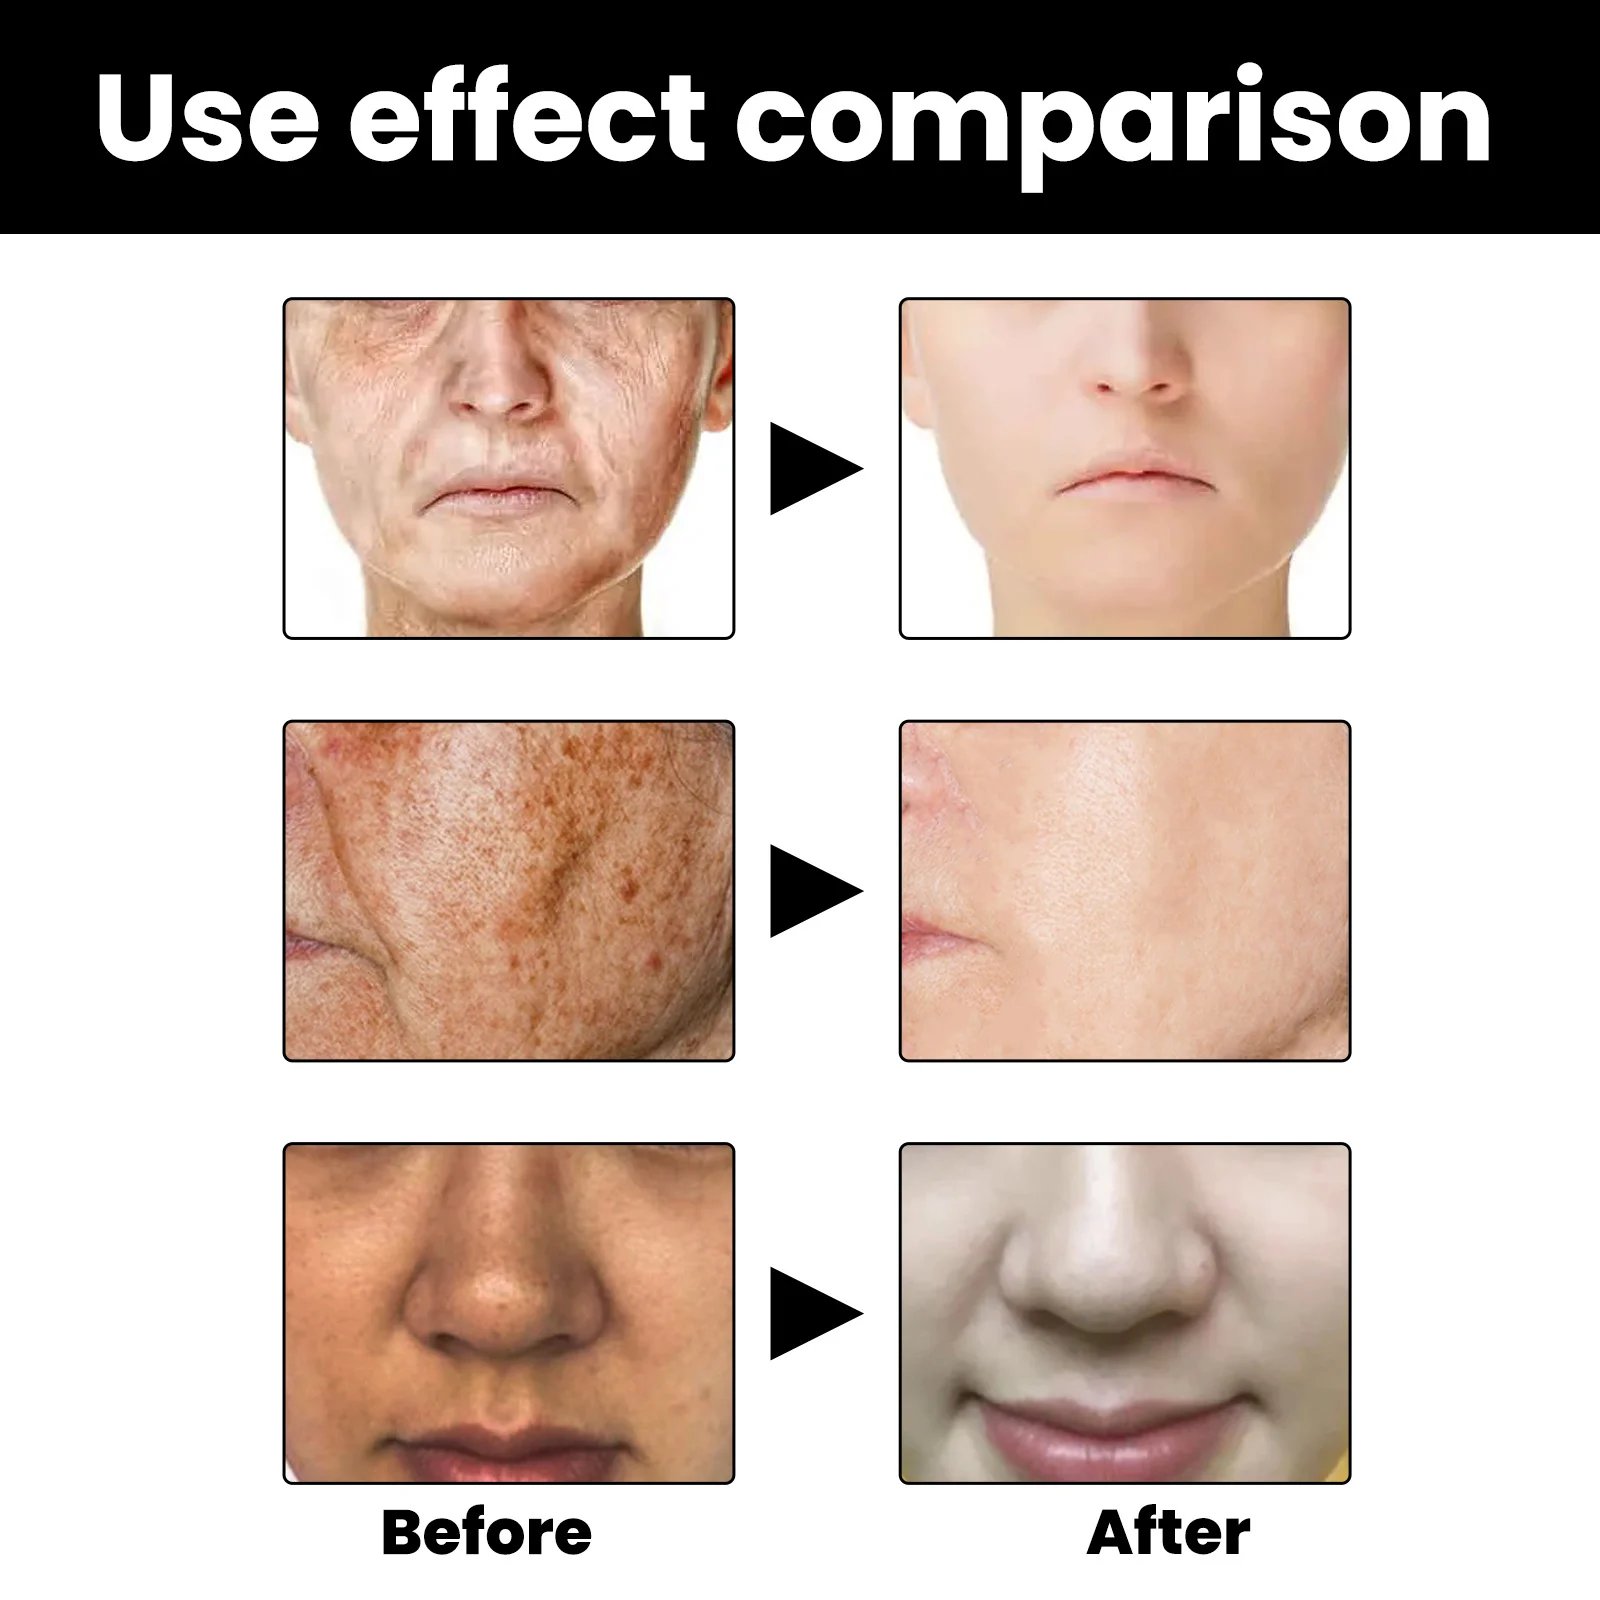 🔥LAST DAY -49%OFF🔥 - Melanin Correcting Facial Serum